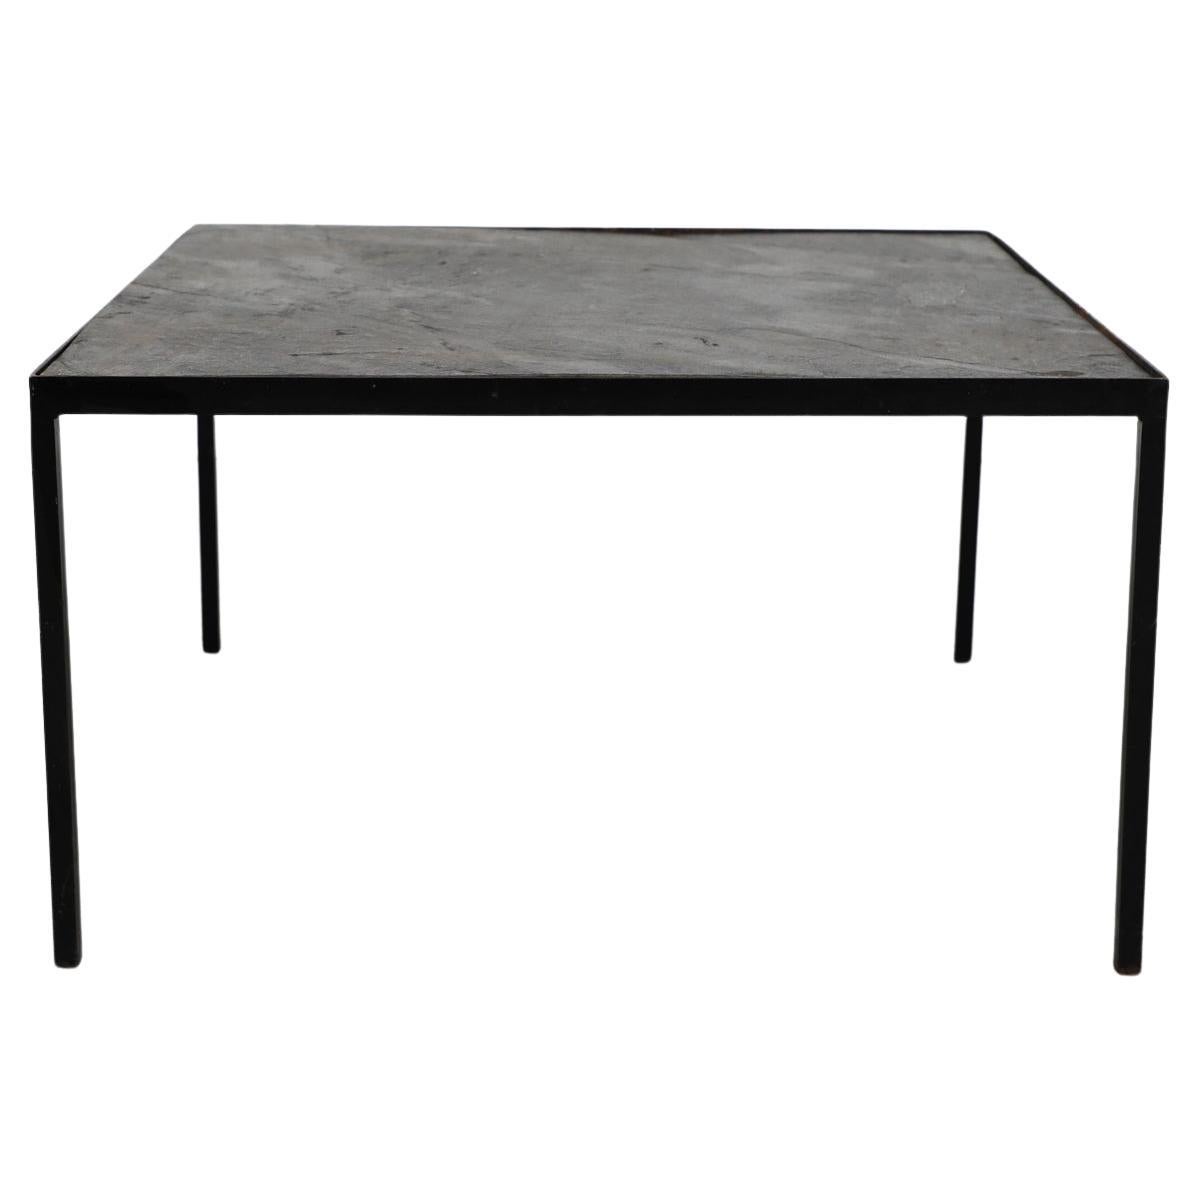 1960s Artimeta Stone Top Coffee Table with Black Enameled Base